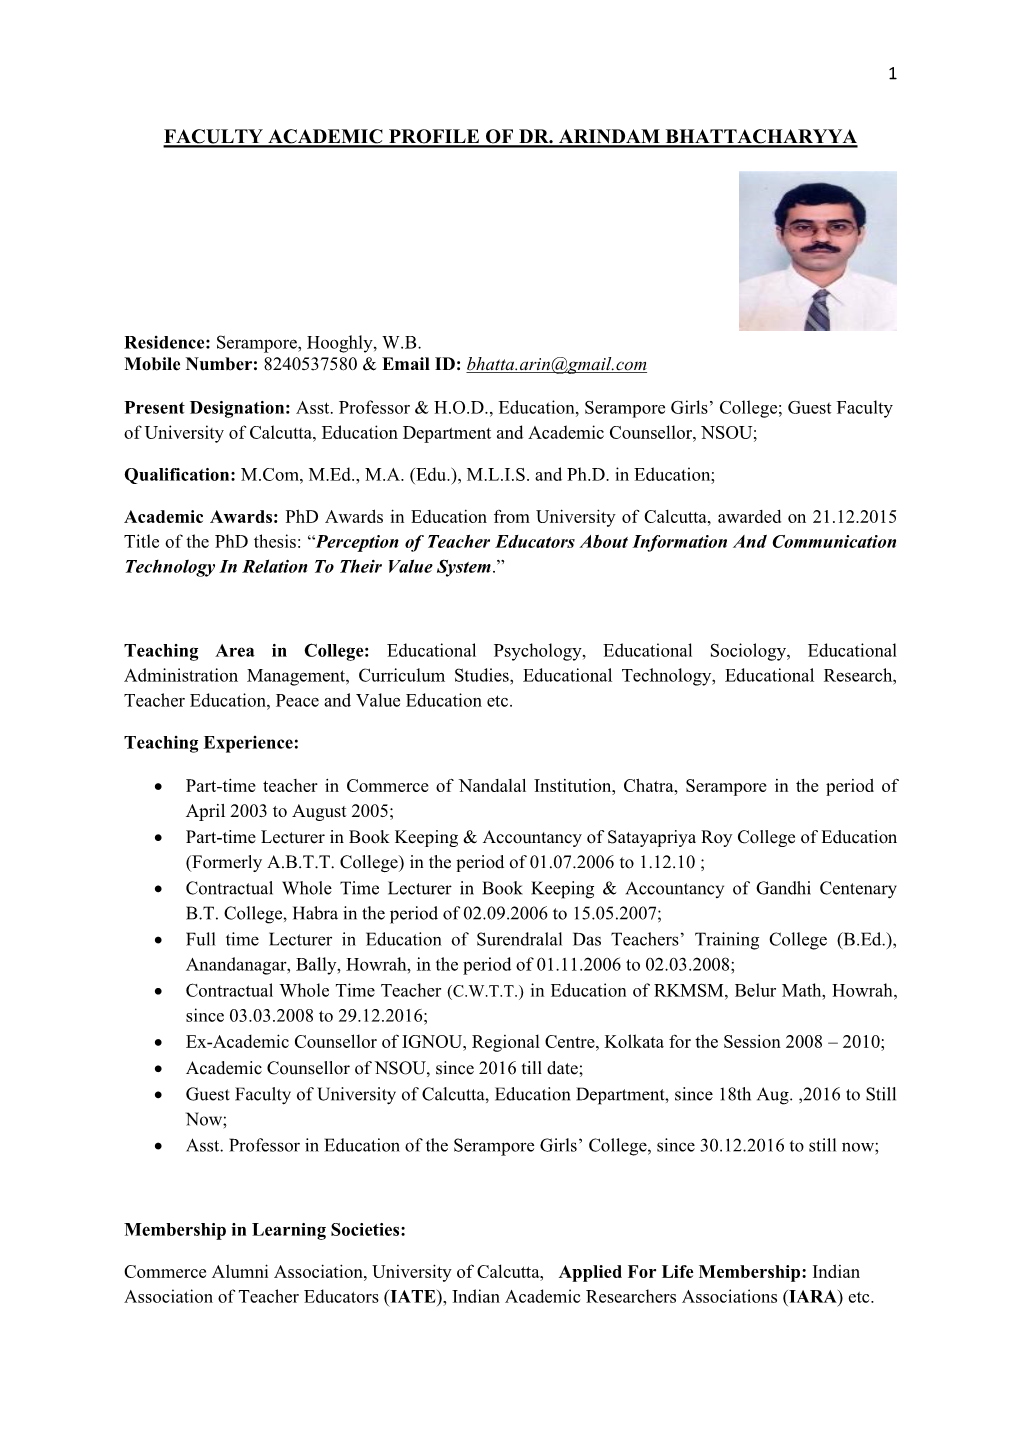 Faculty Academic Profile of Dr. Arindam Bhattacharyya